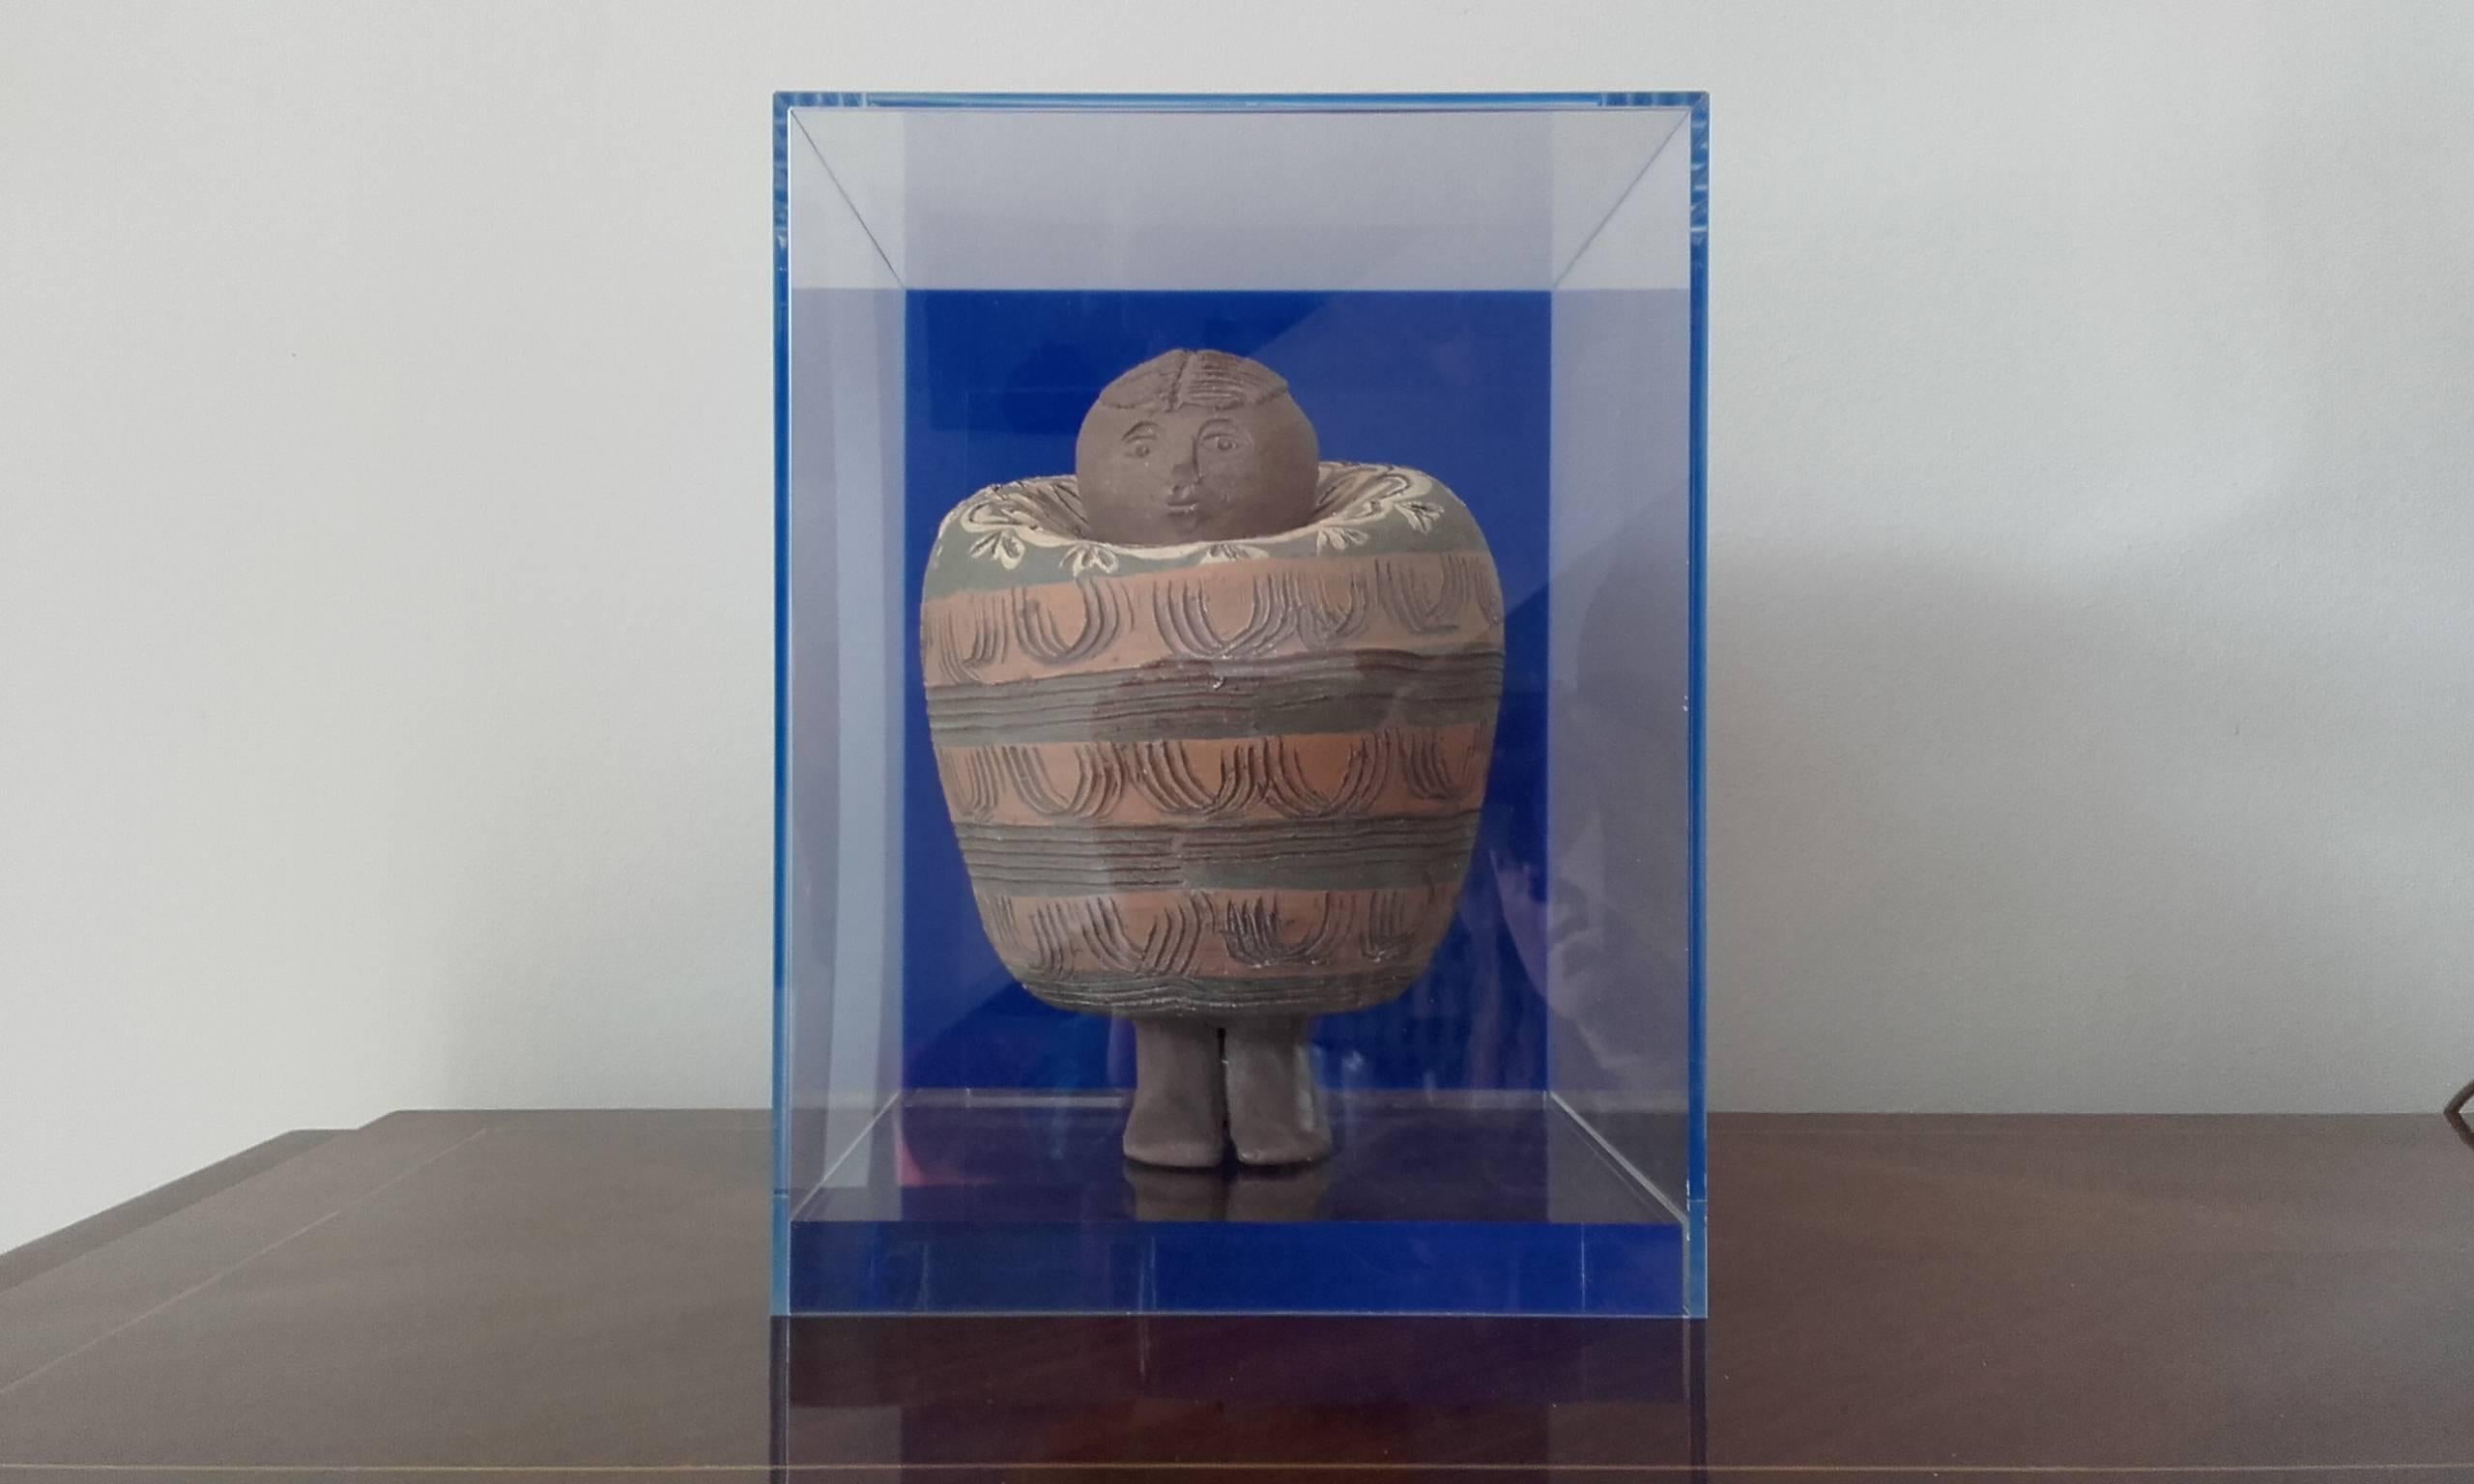 Matt glazed figural ceramic in bespoke plexi case attributed to Albert Thiry. Unsigned.